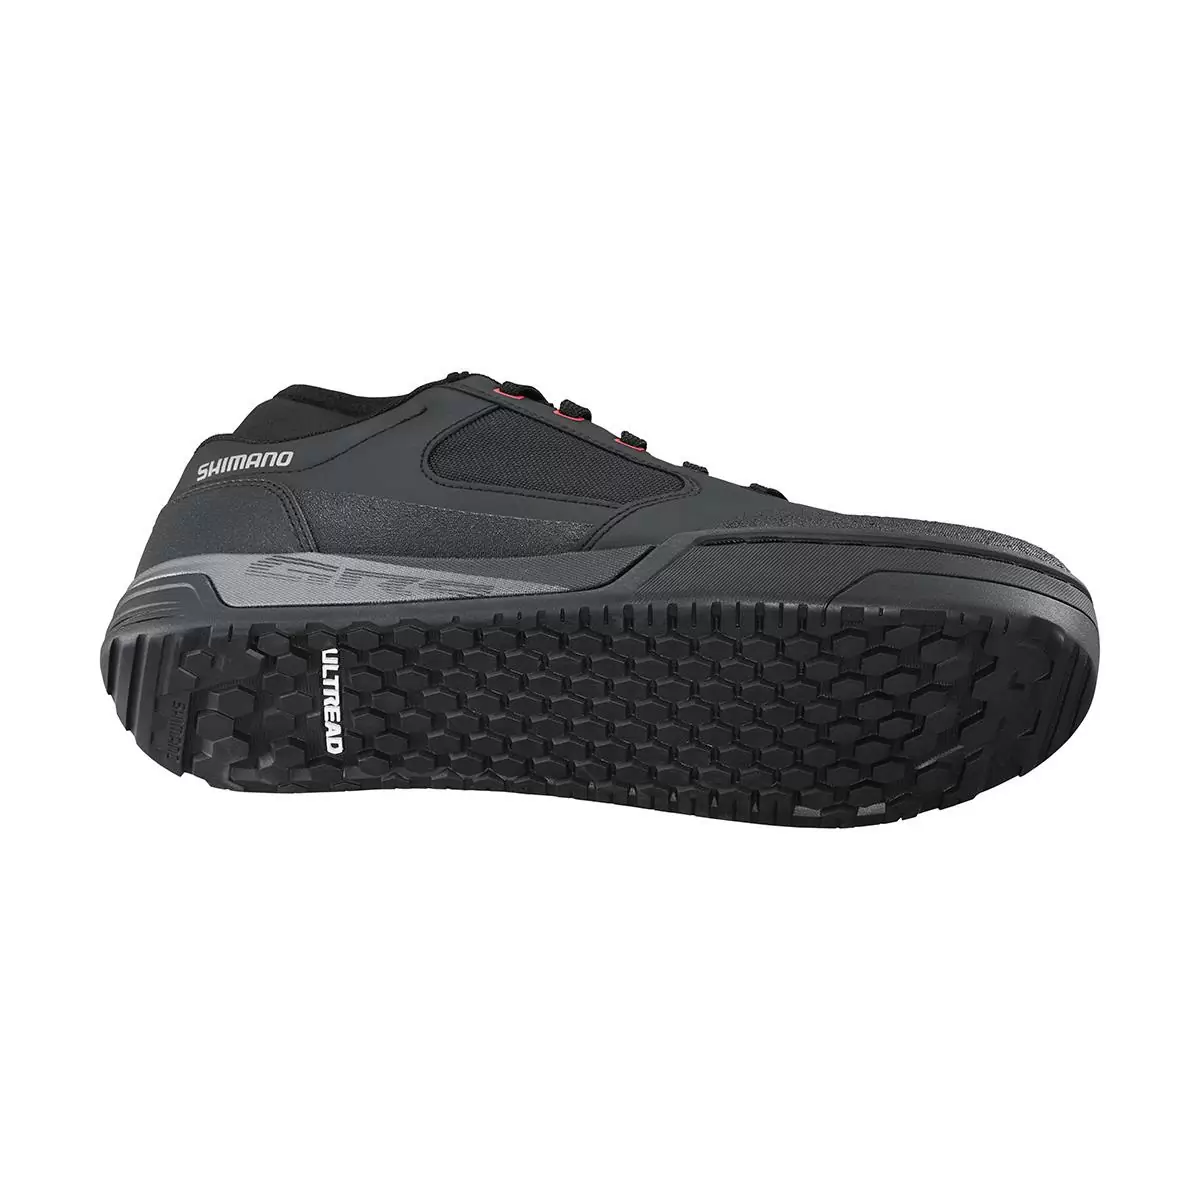 Flache MTB-Schuhe GR903 SH-GR903 schwarz Größe 48 #2